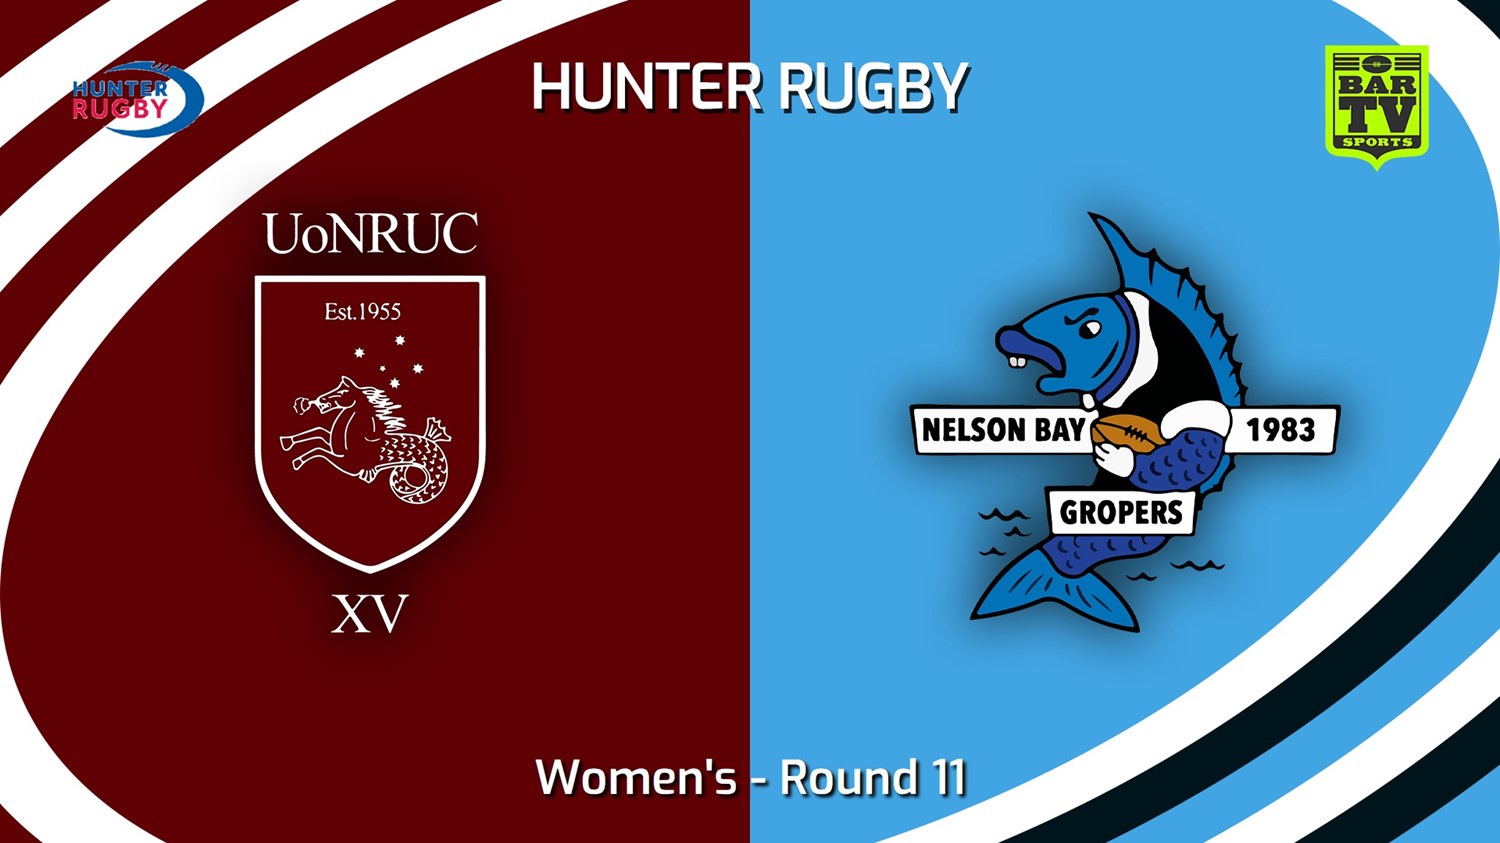 230701-Hunter Rugby Round 11 - Women's - University Of Newcastle v Nelson Bay Gropers Slate Image